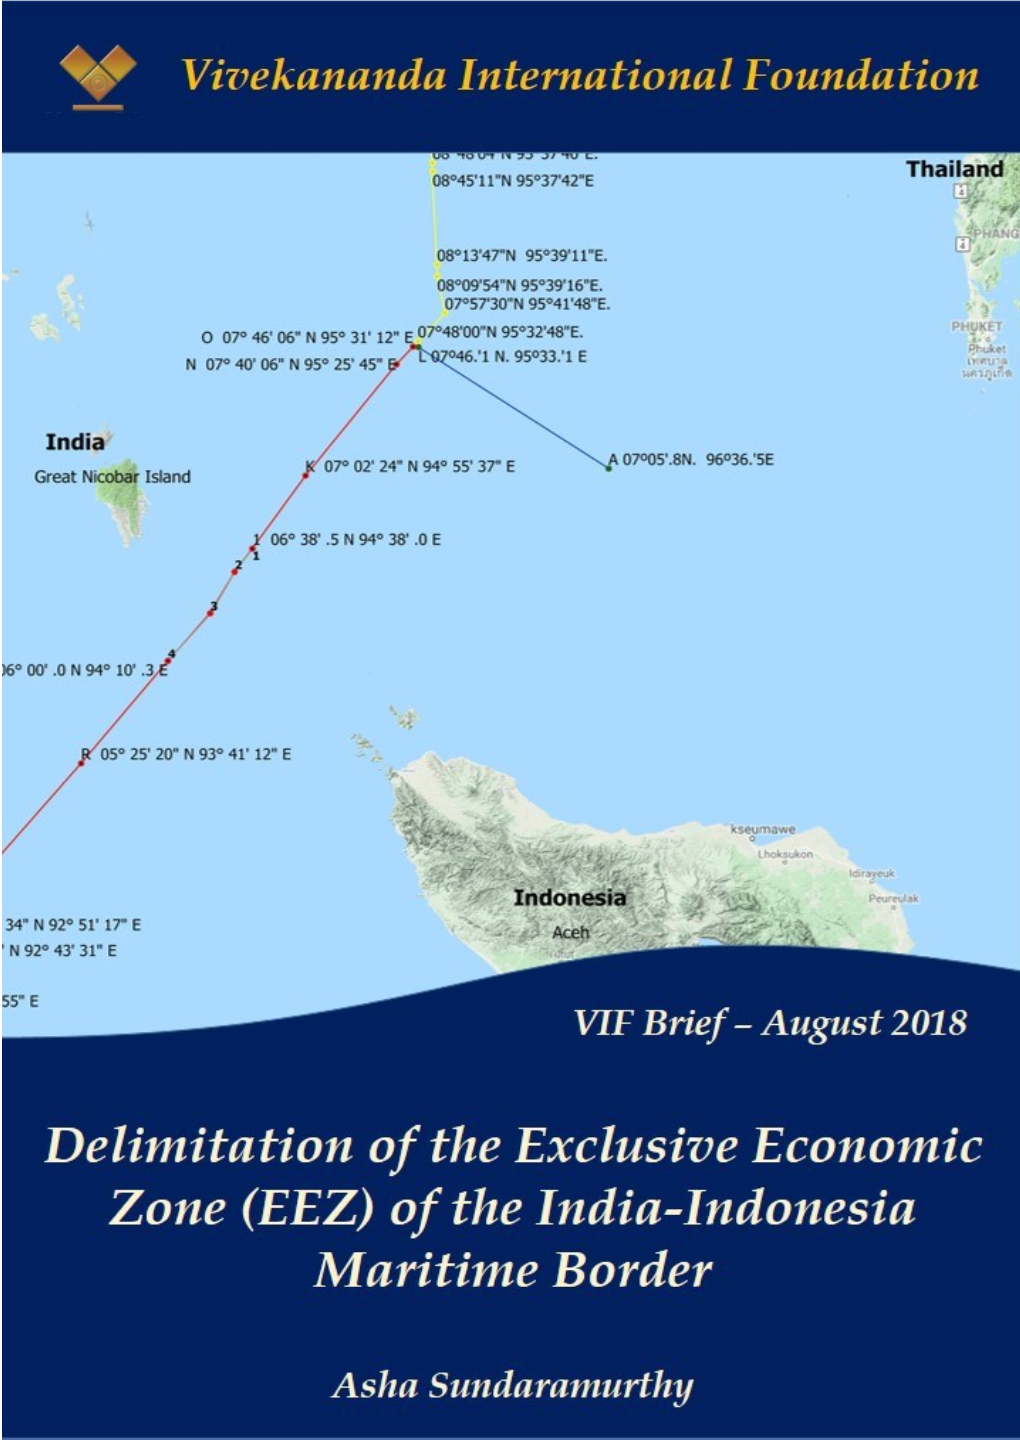 Delimitation of the Exclusive Economic Zone